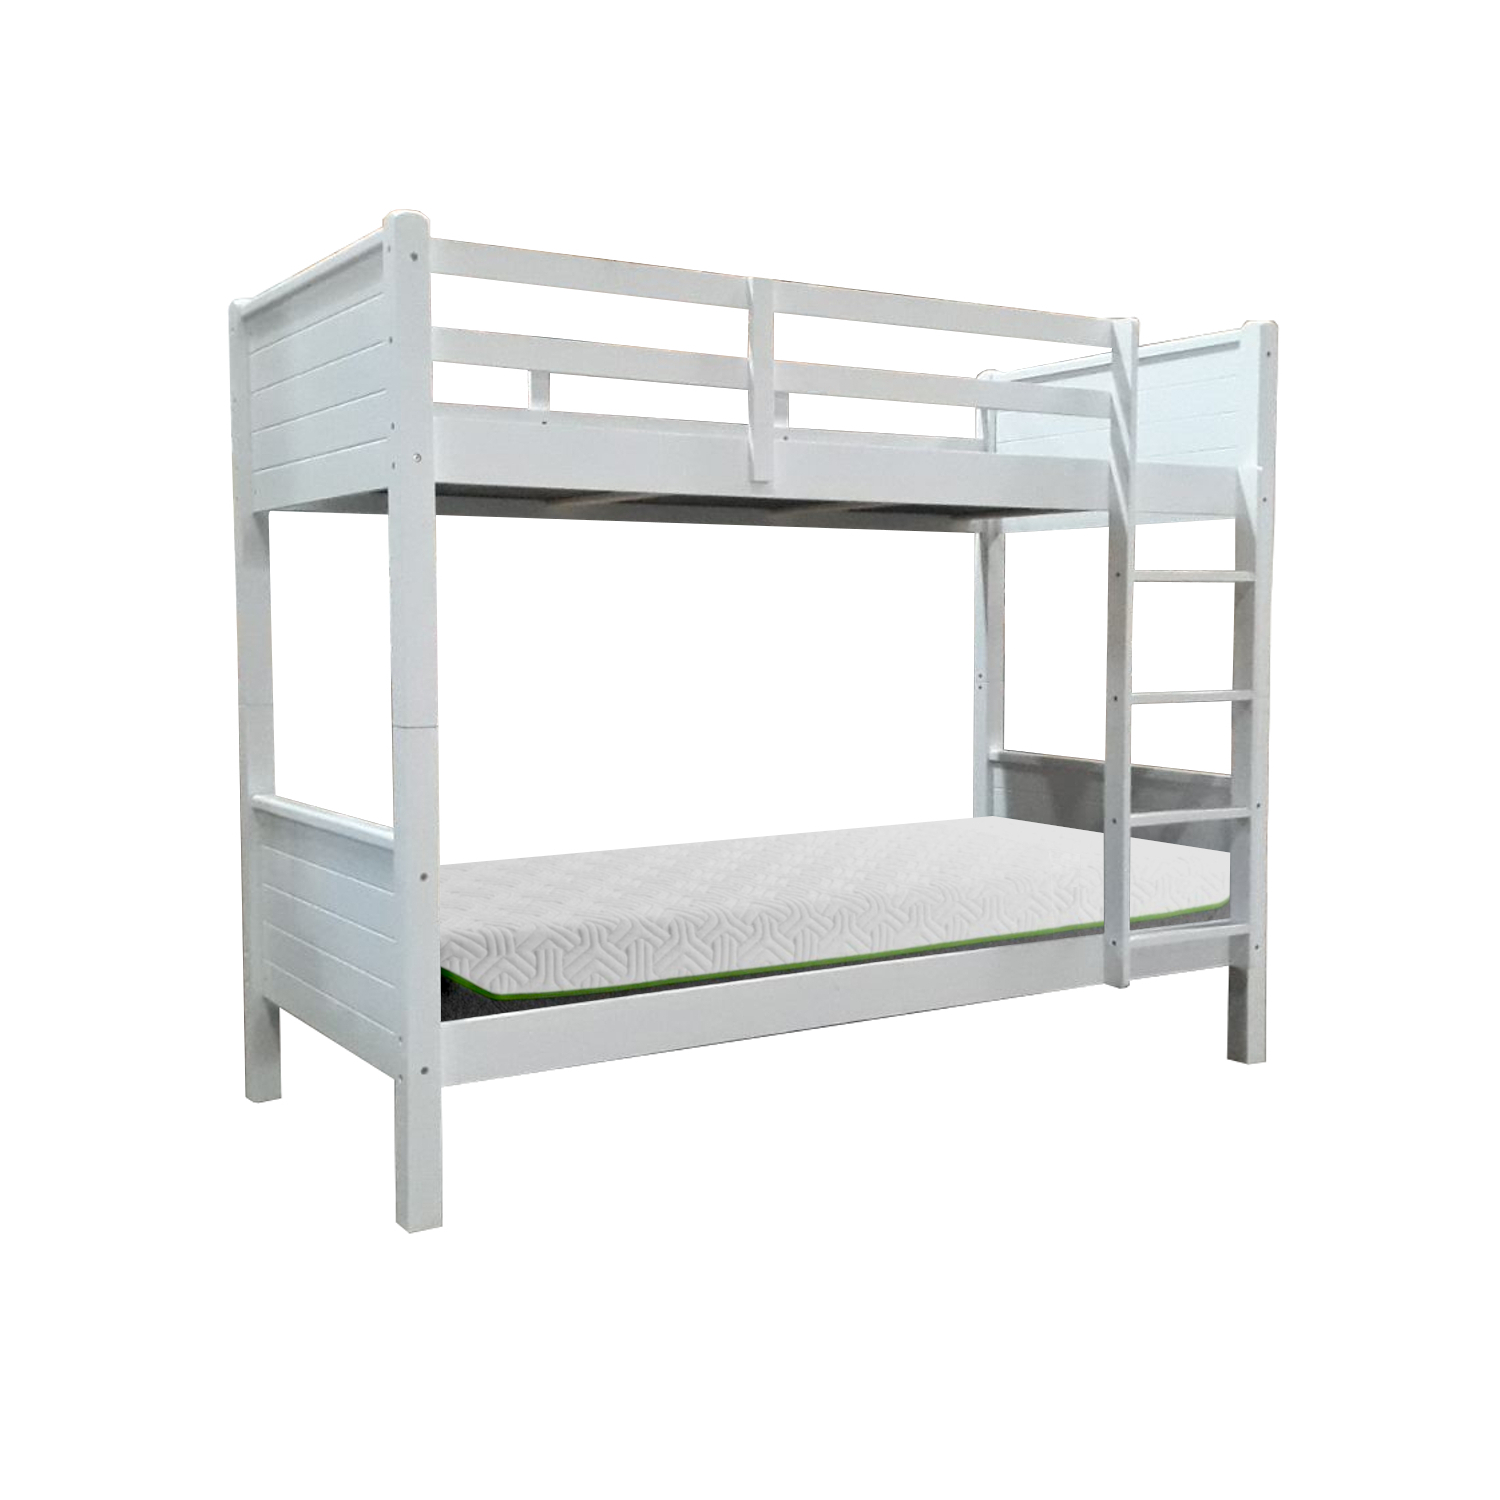 Beatrice Bunk Bed Furniture, Detachable Bunk Beds Ikea